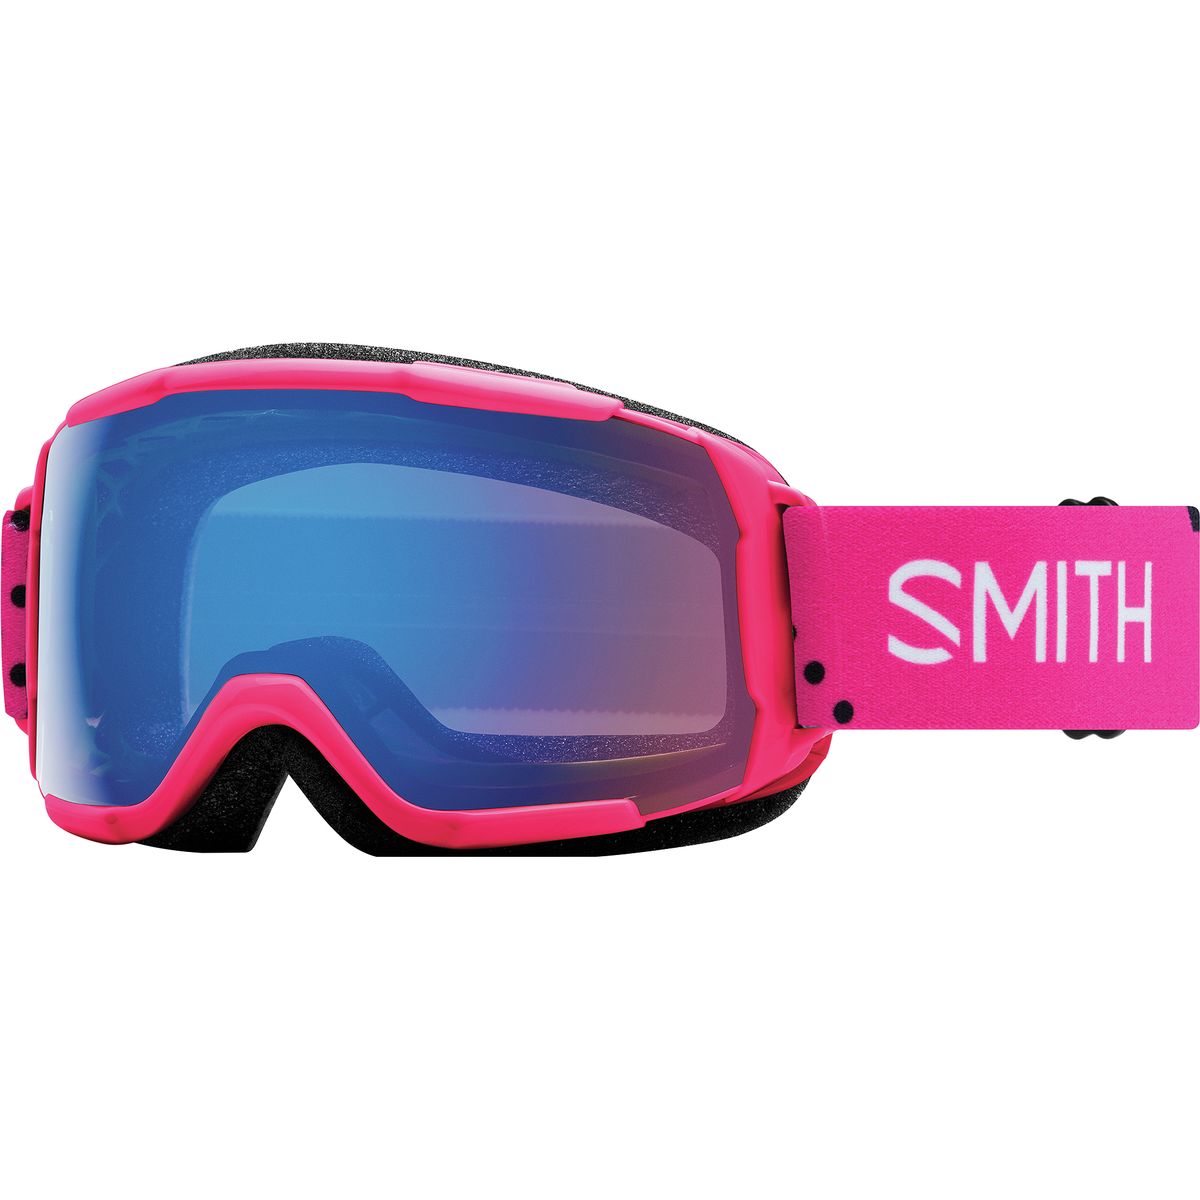 Smith Grom ChromaPop Goggles - Kids' Pink Monaco/Chromapop Storm Rose Flash